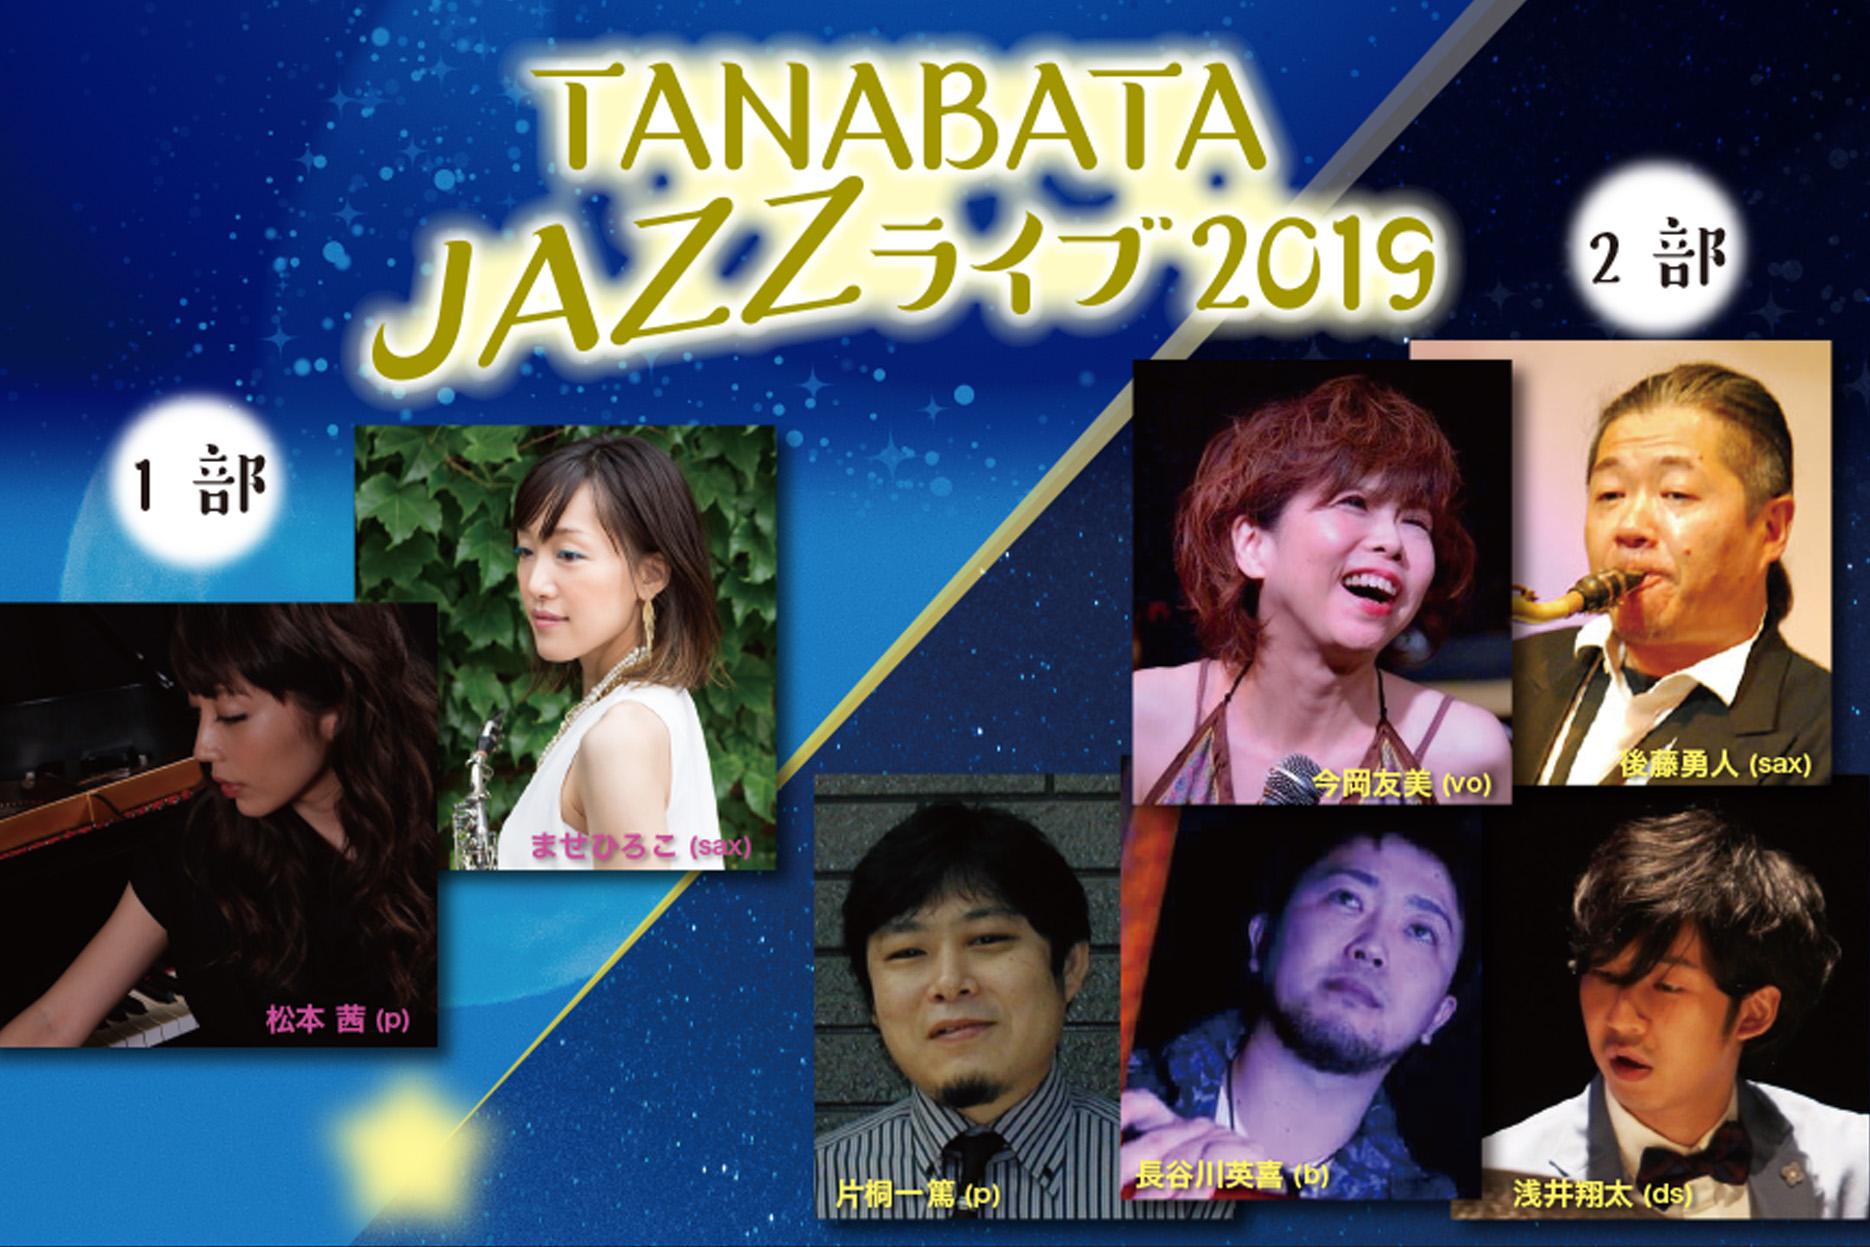 「TANABATA JAZZライブ2019」を開催します！